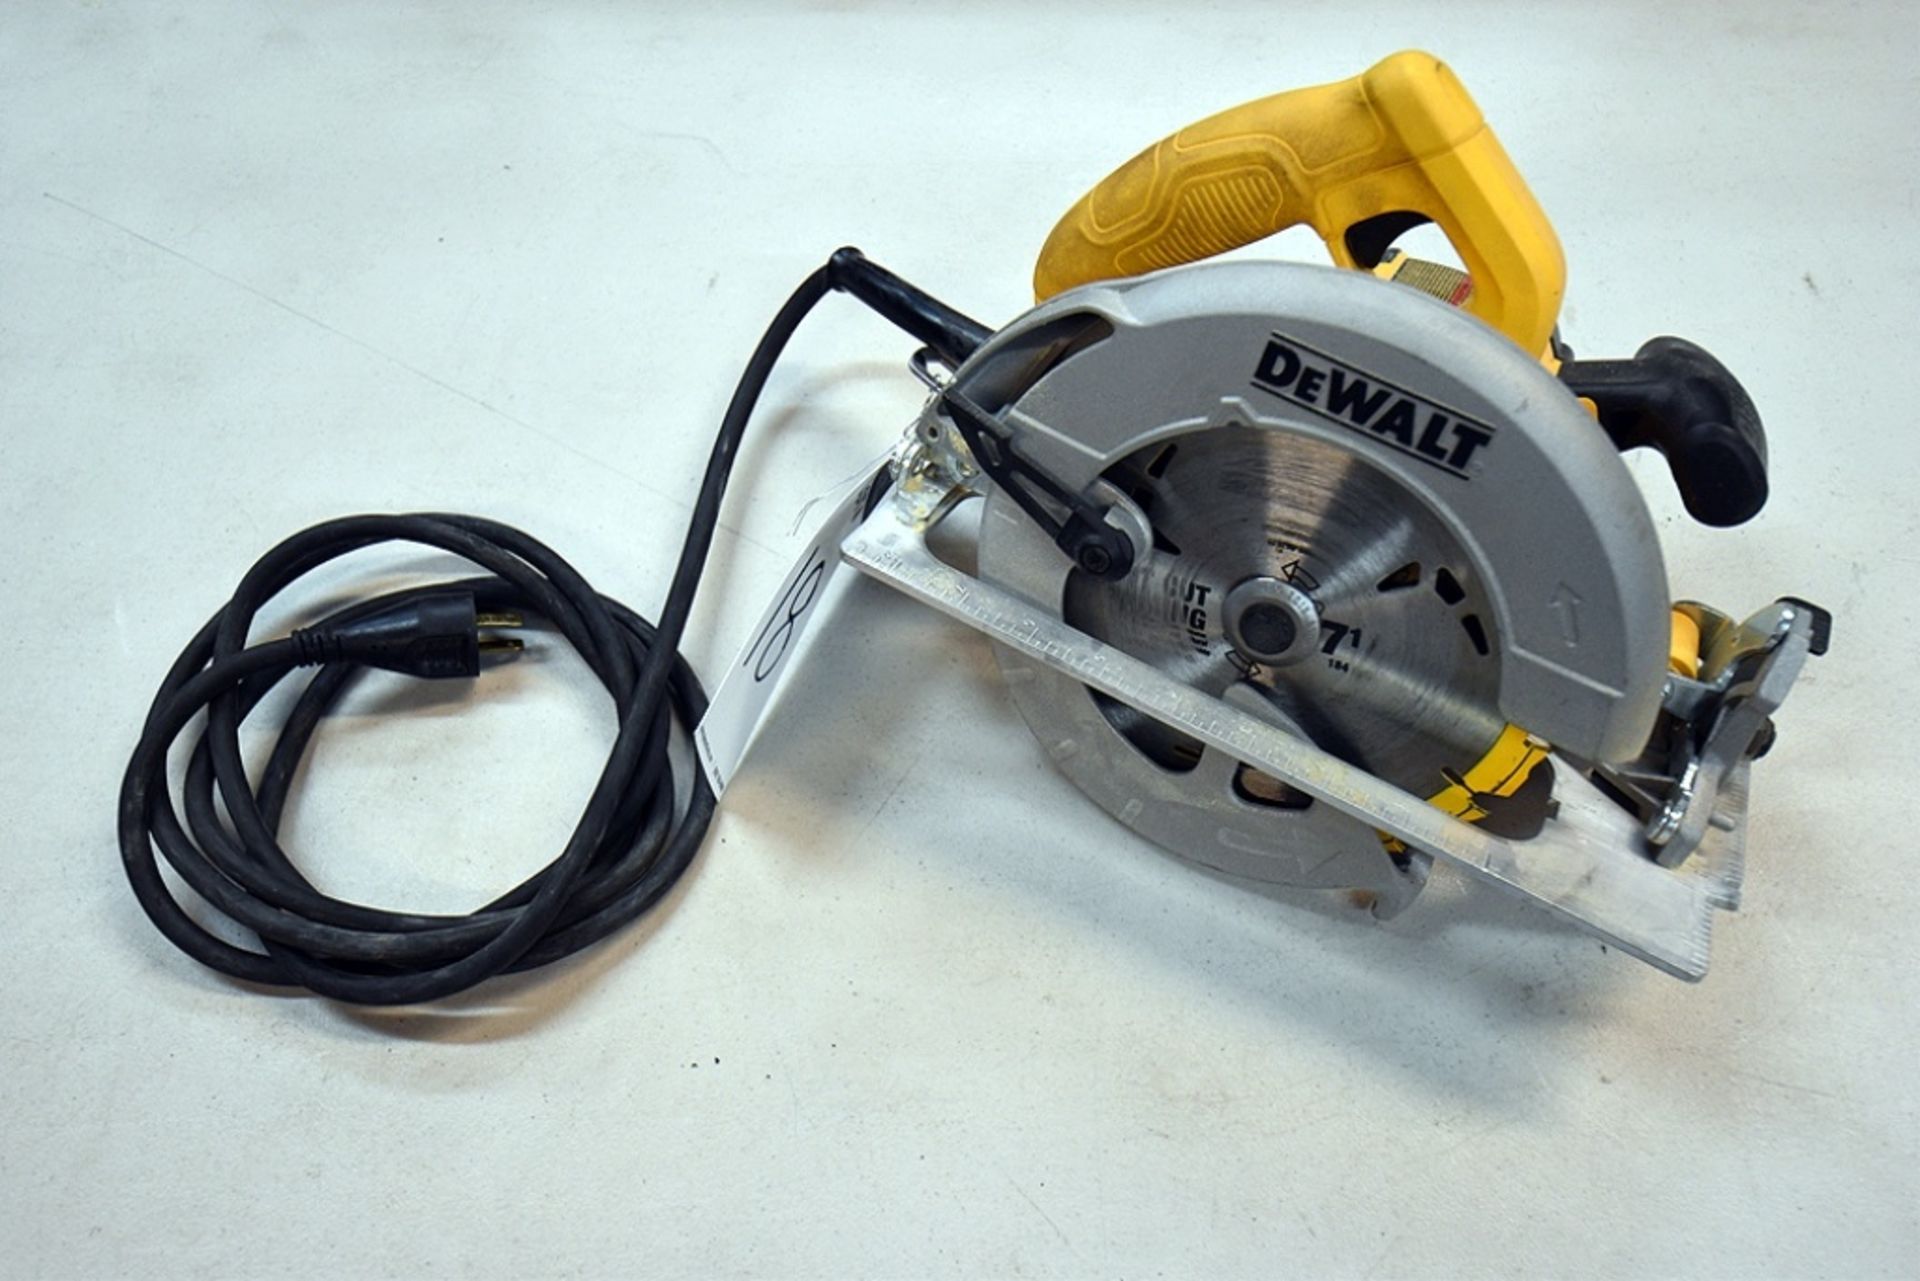 DeWalt DWE575 7-1/4" Corded Circular Saw